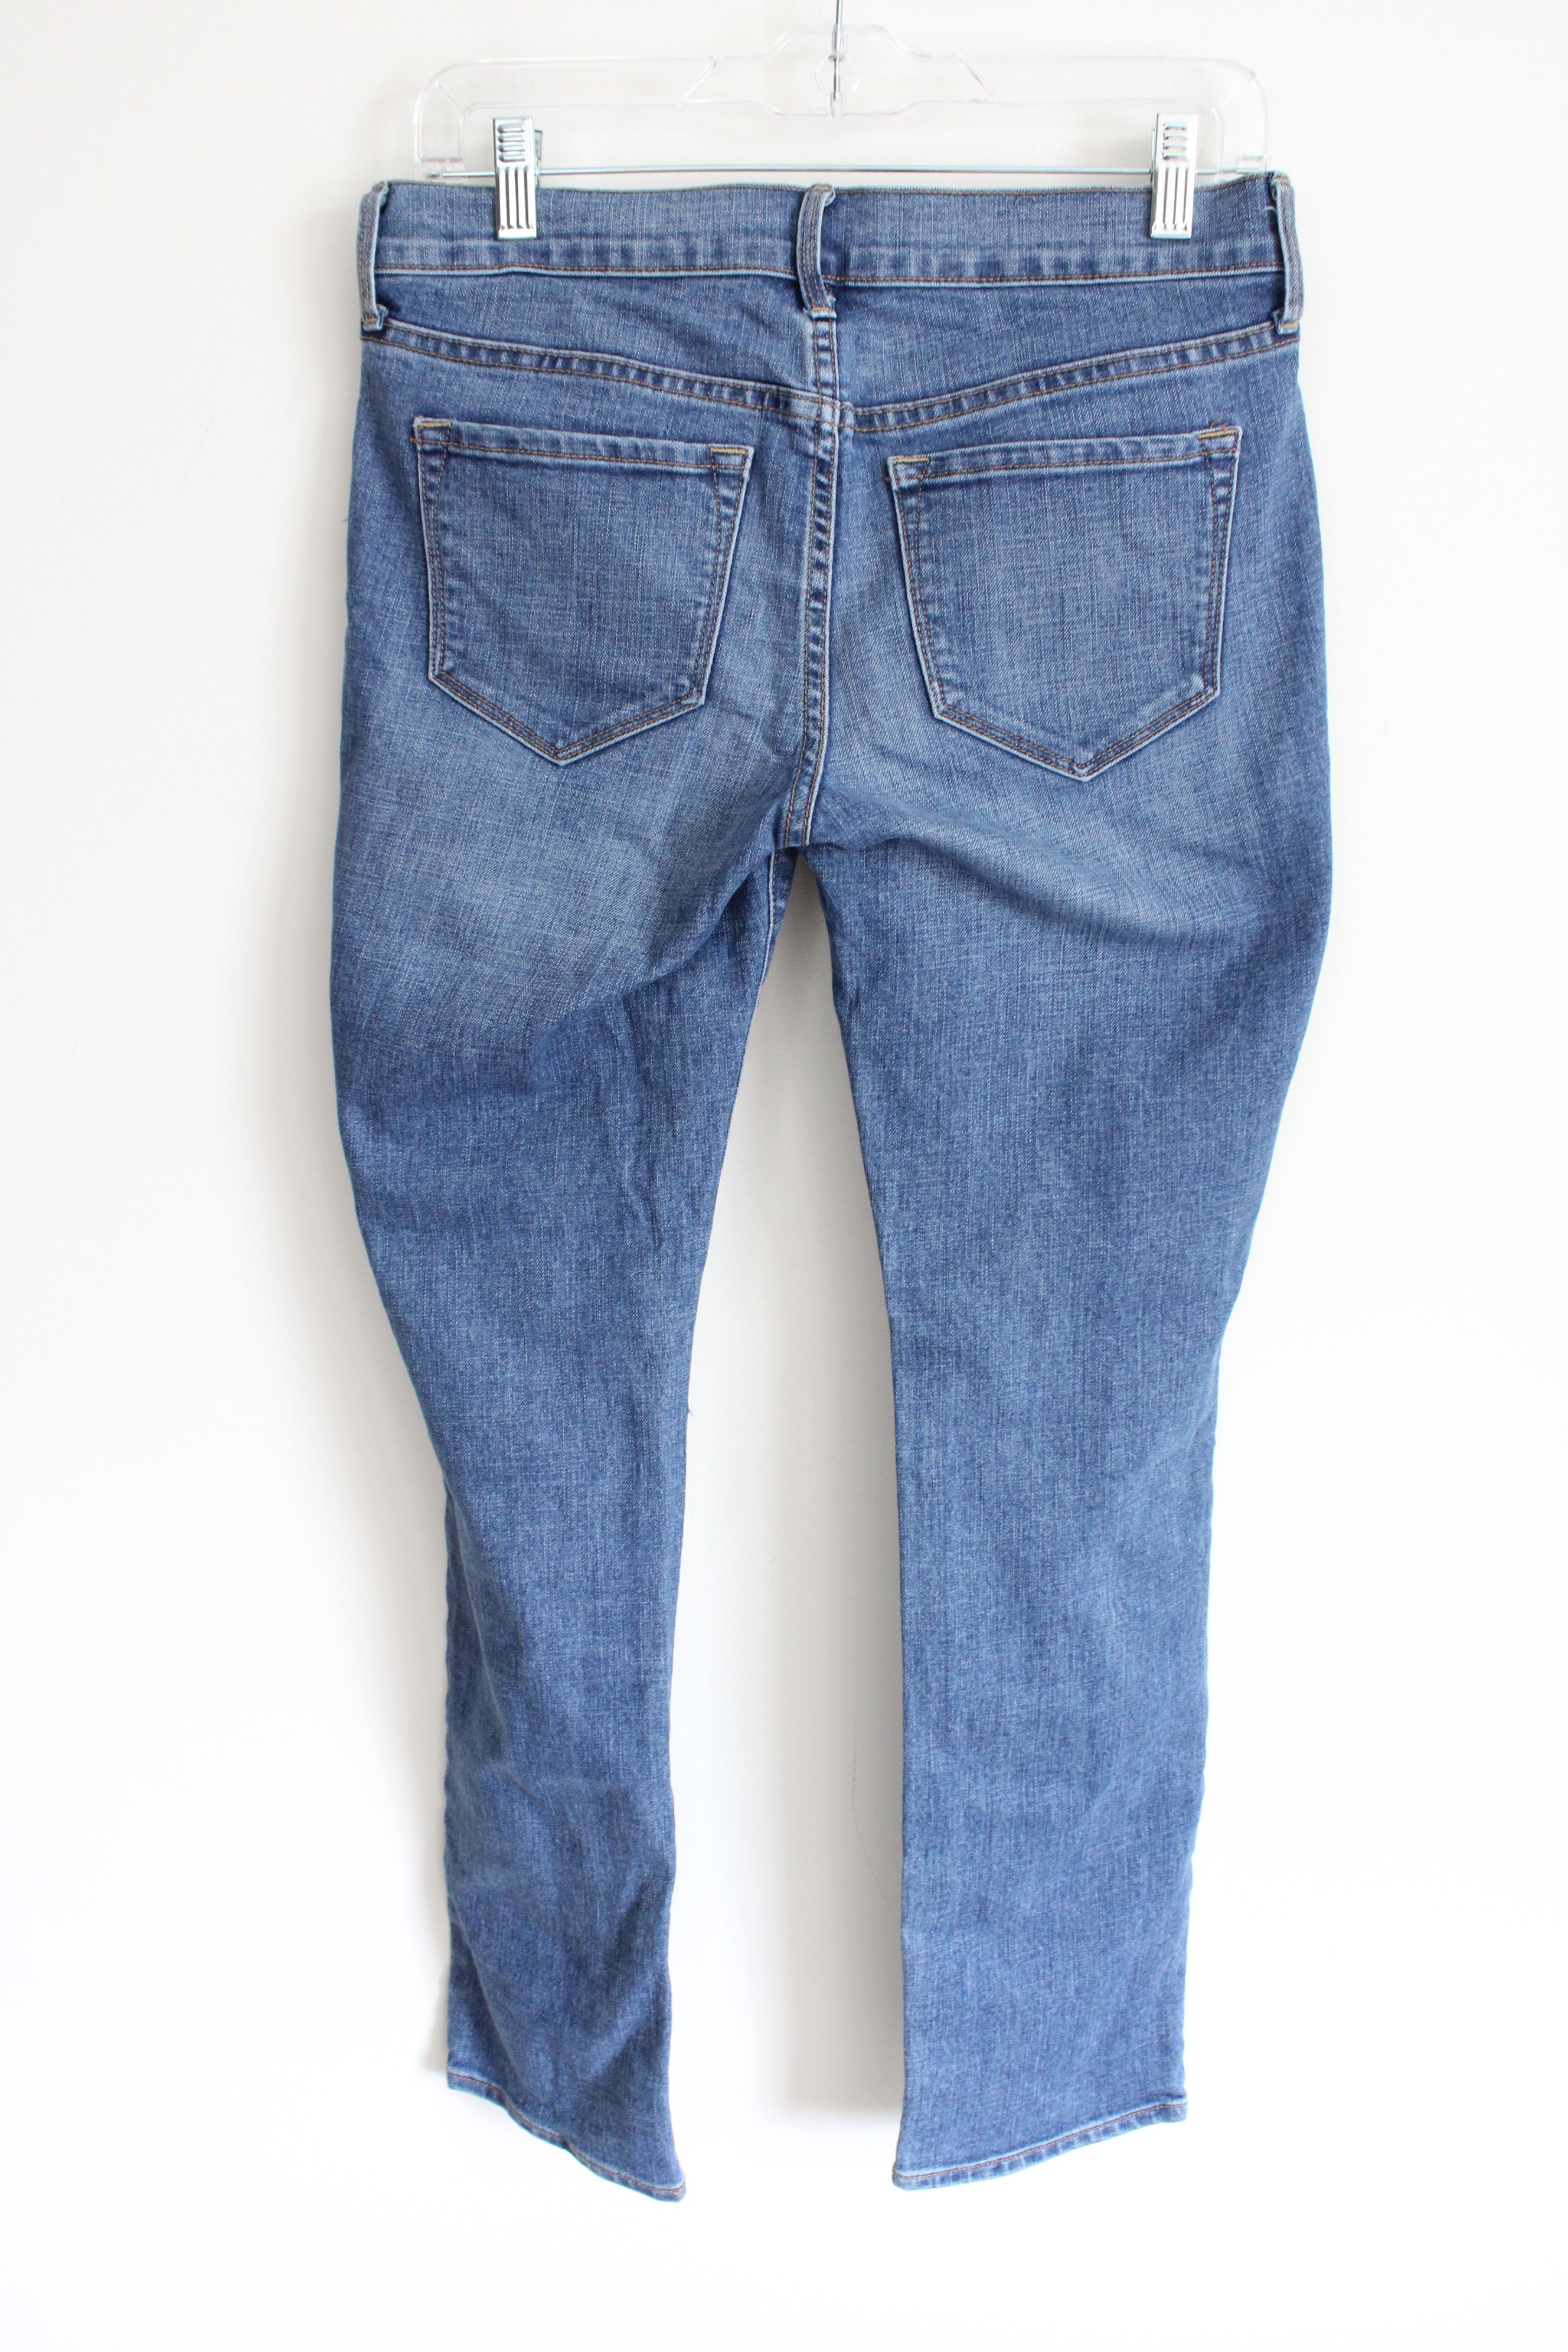 Old Navy Mid Rise Original Jeans | 12 Short